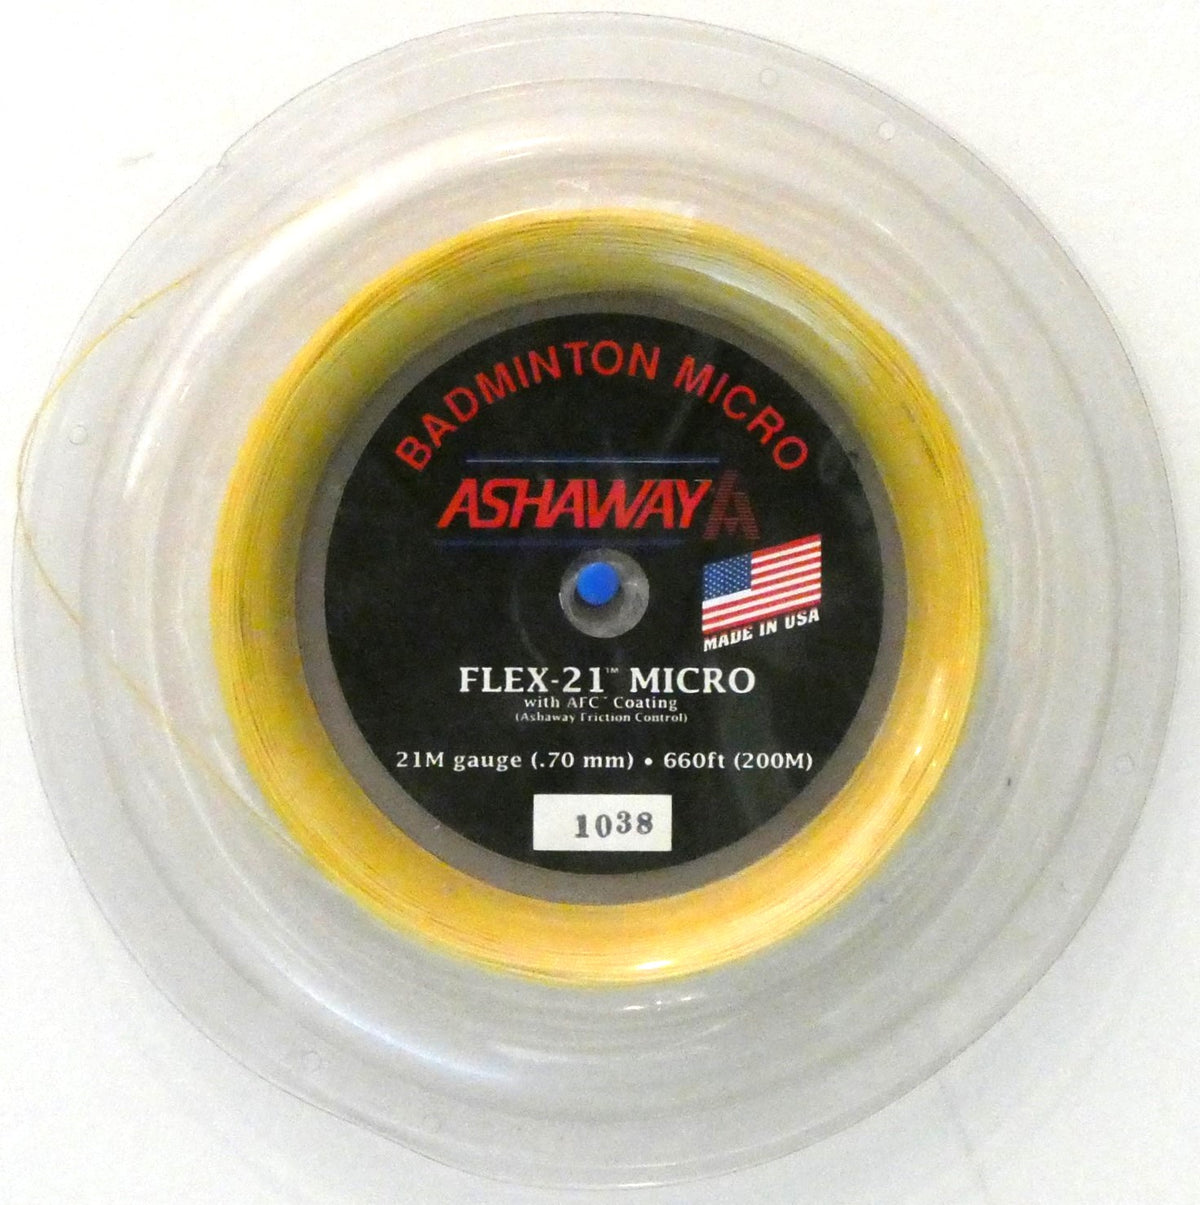 Ashaway Flex 21 Micro Badminton String, Yellow, 200 M REEL